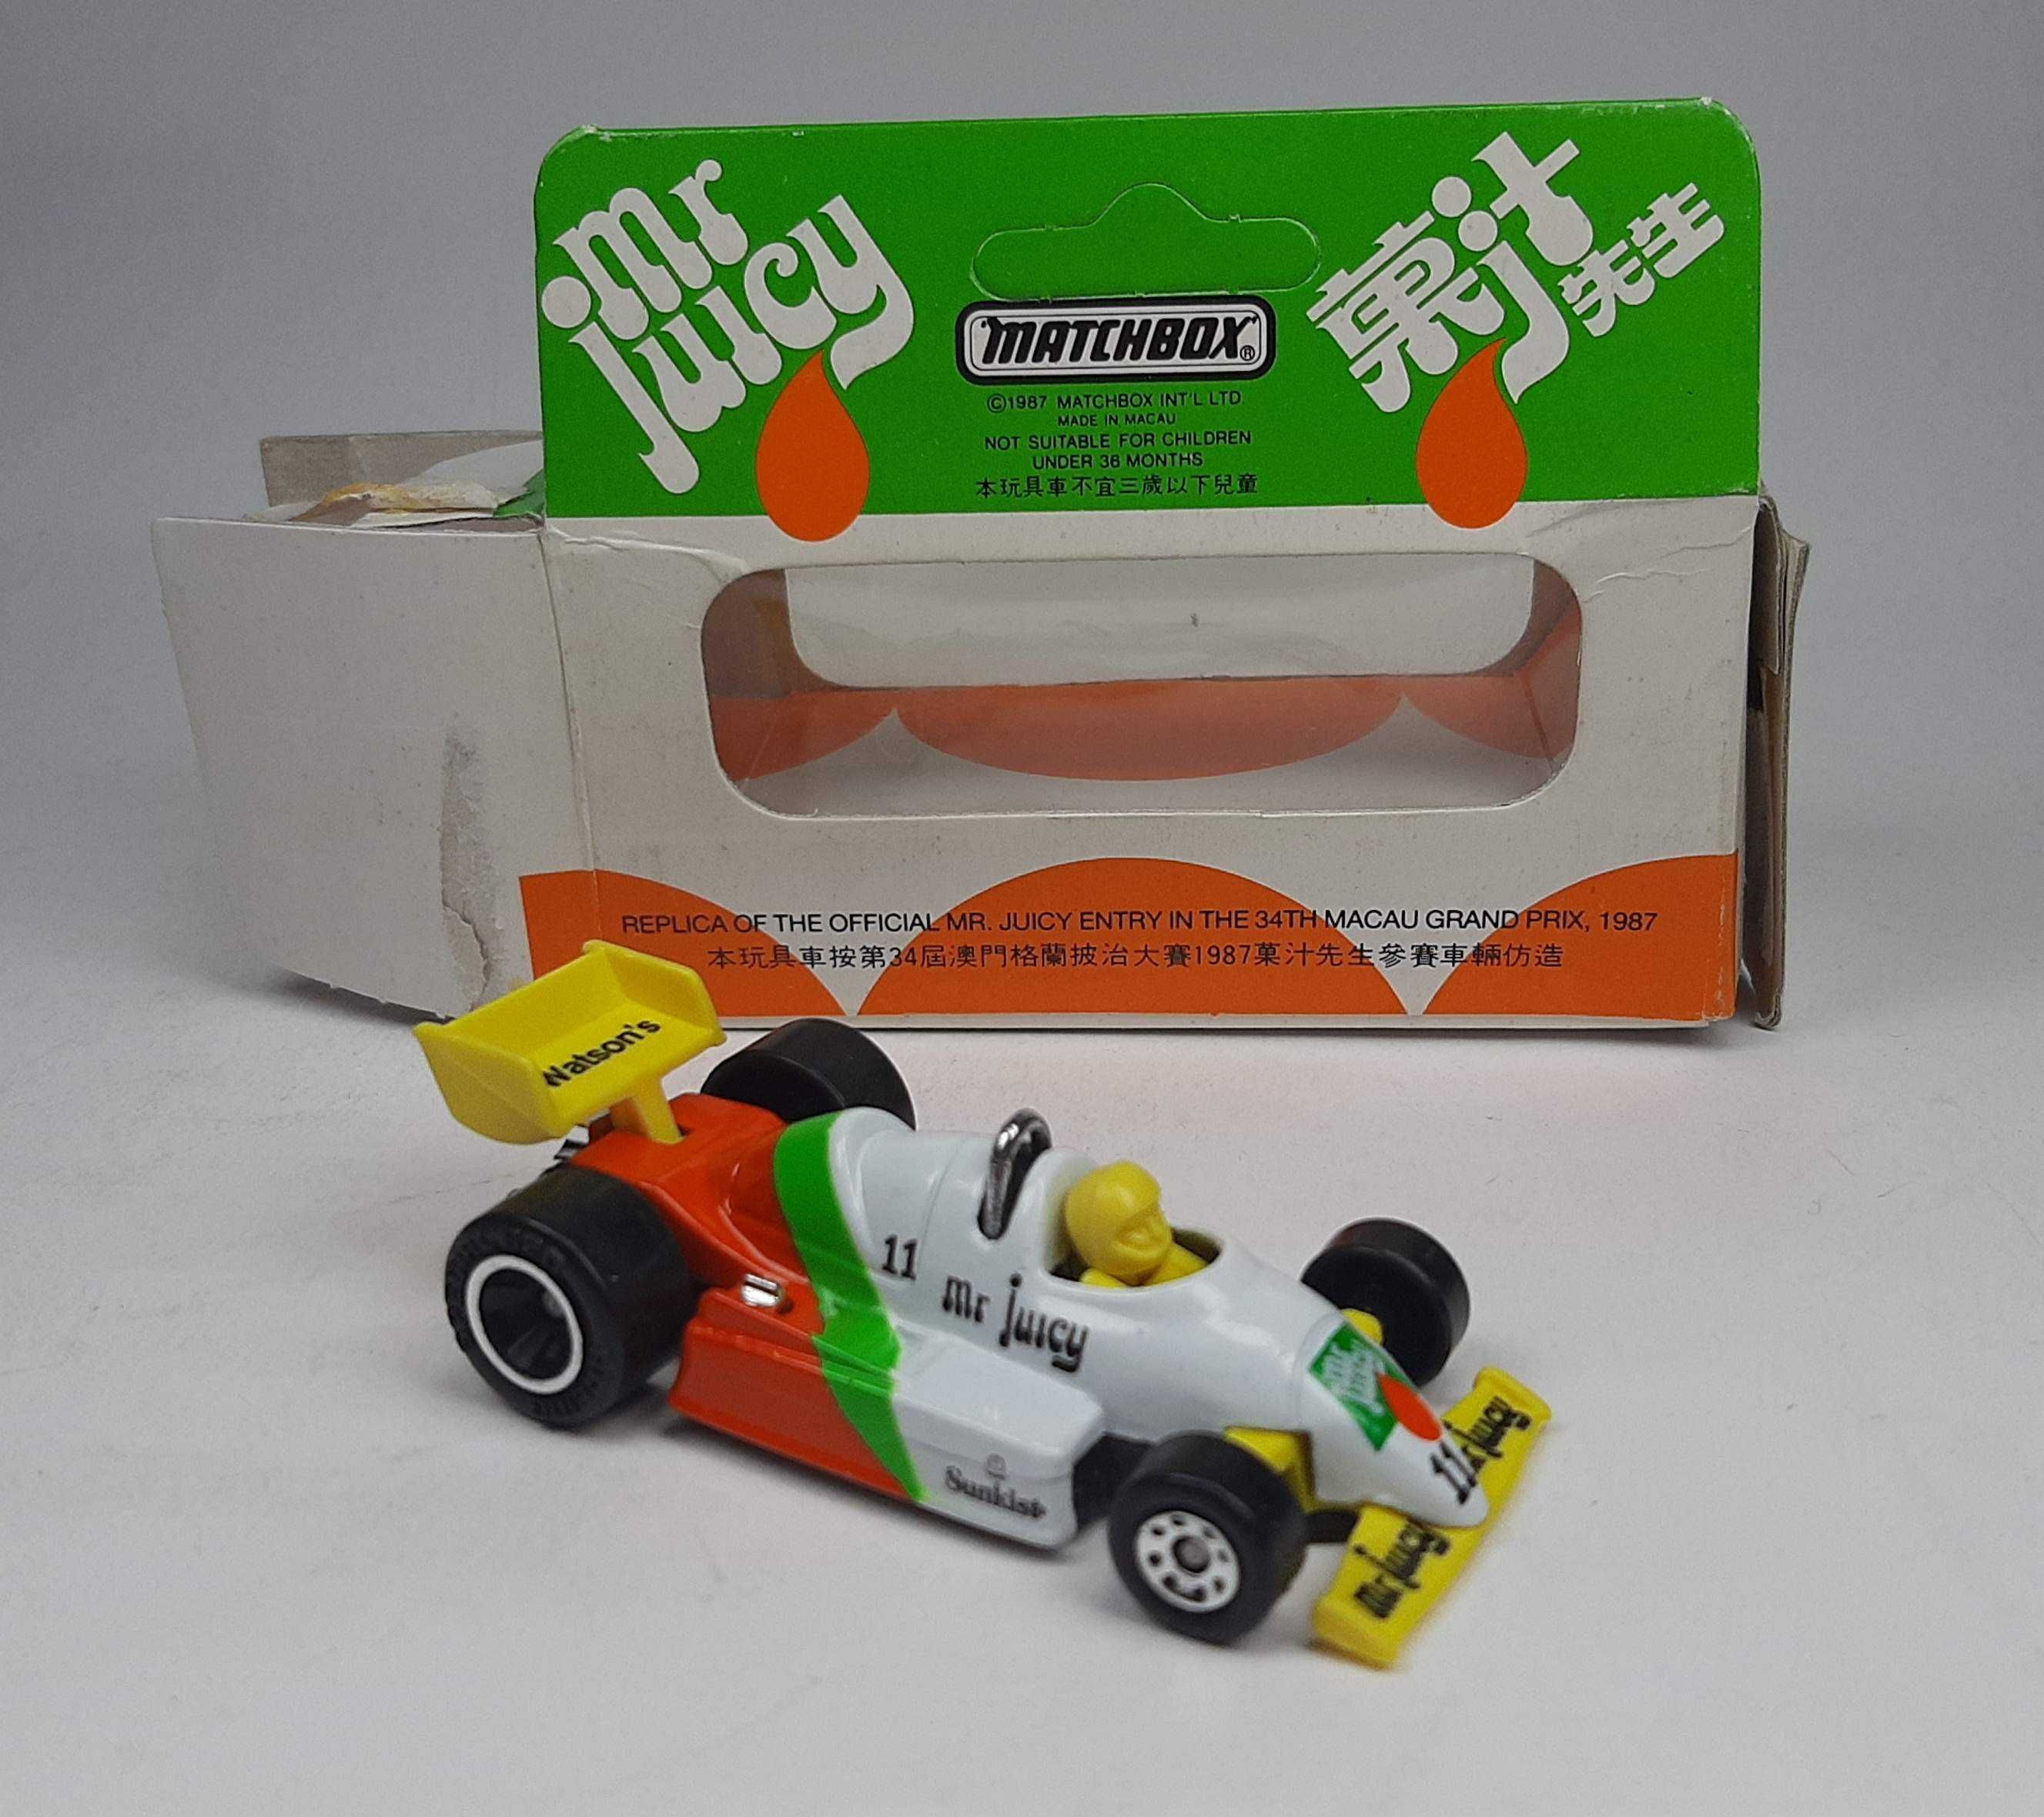 MATCHBOX F1 Formula Racer "Mr.Juicy Sunkist" Promotional Made in Macau